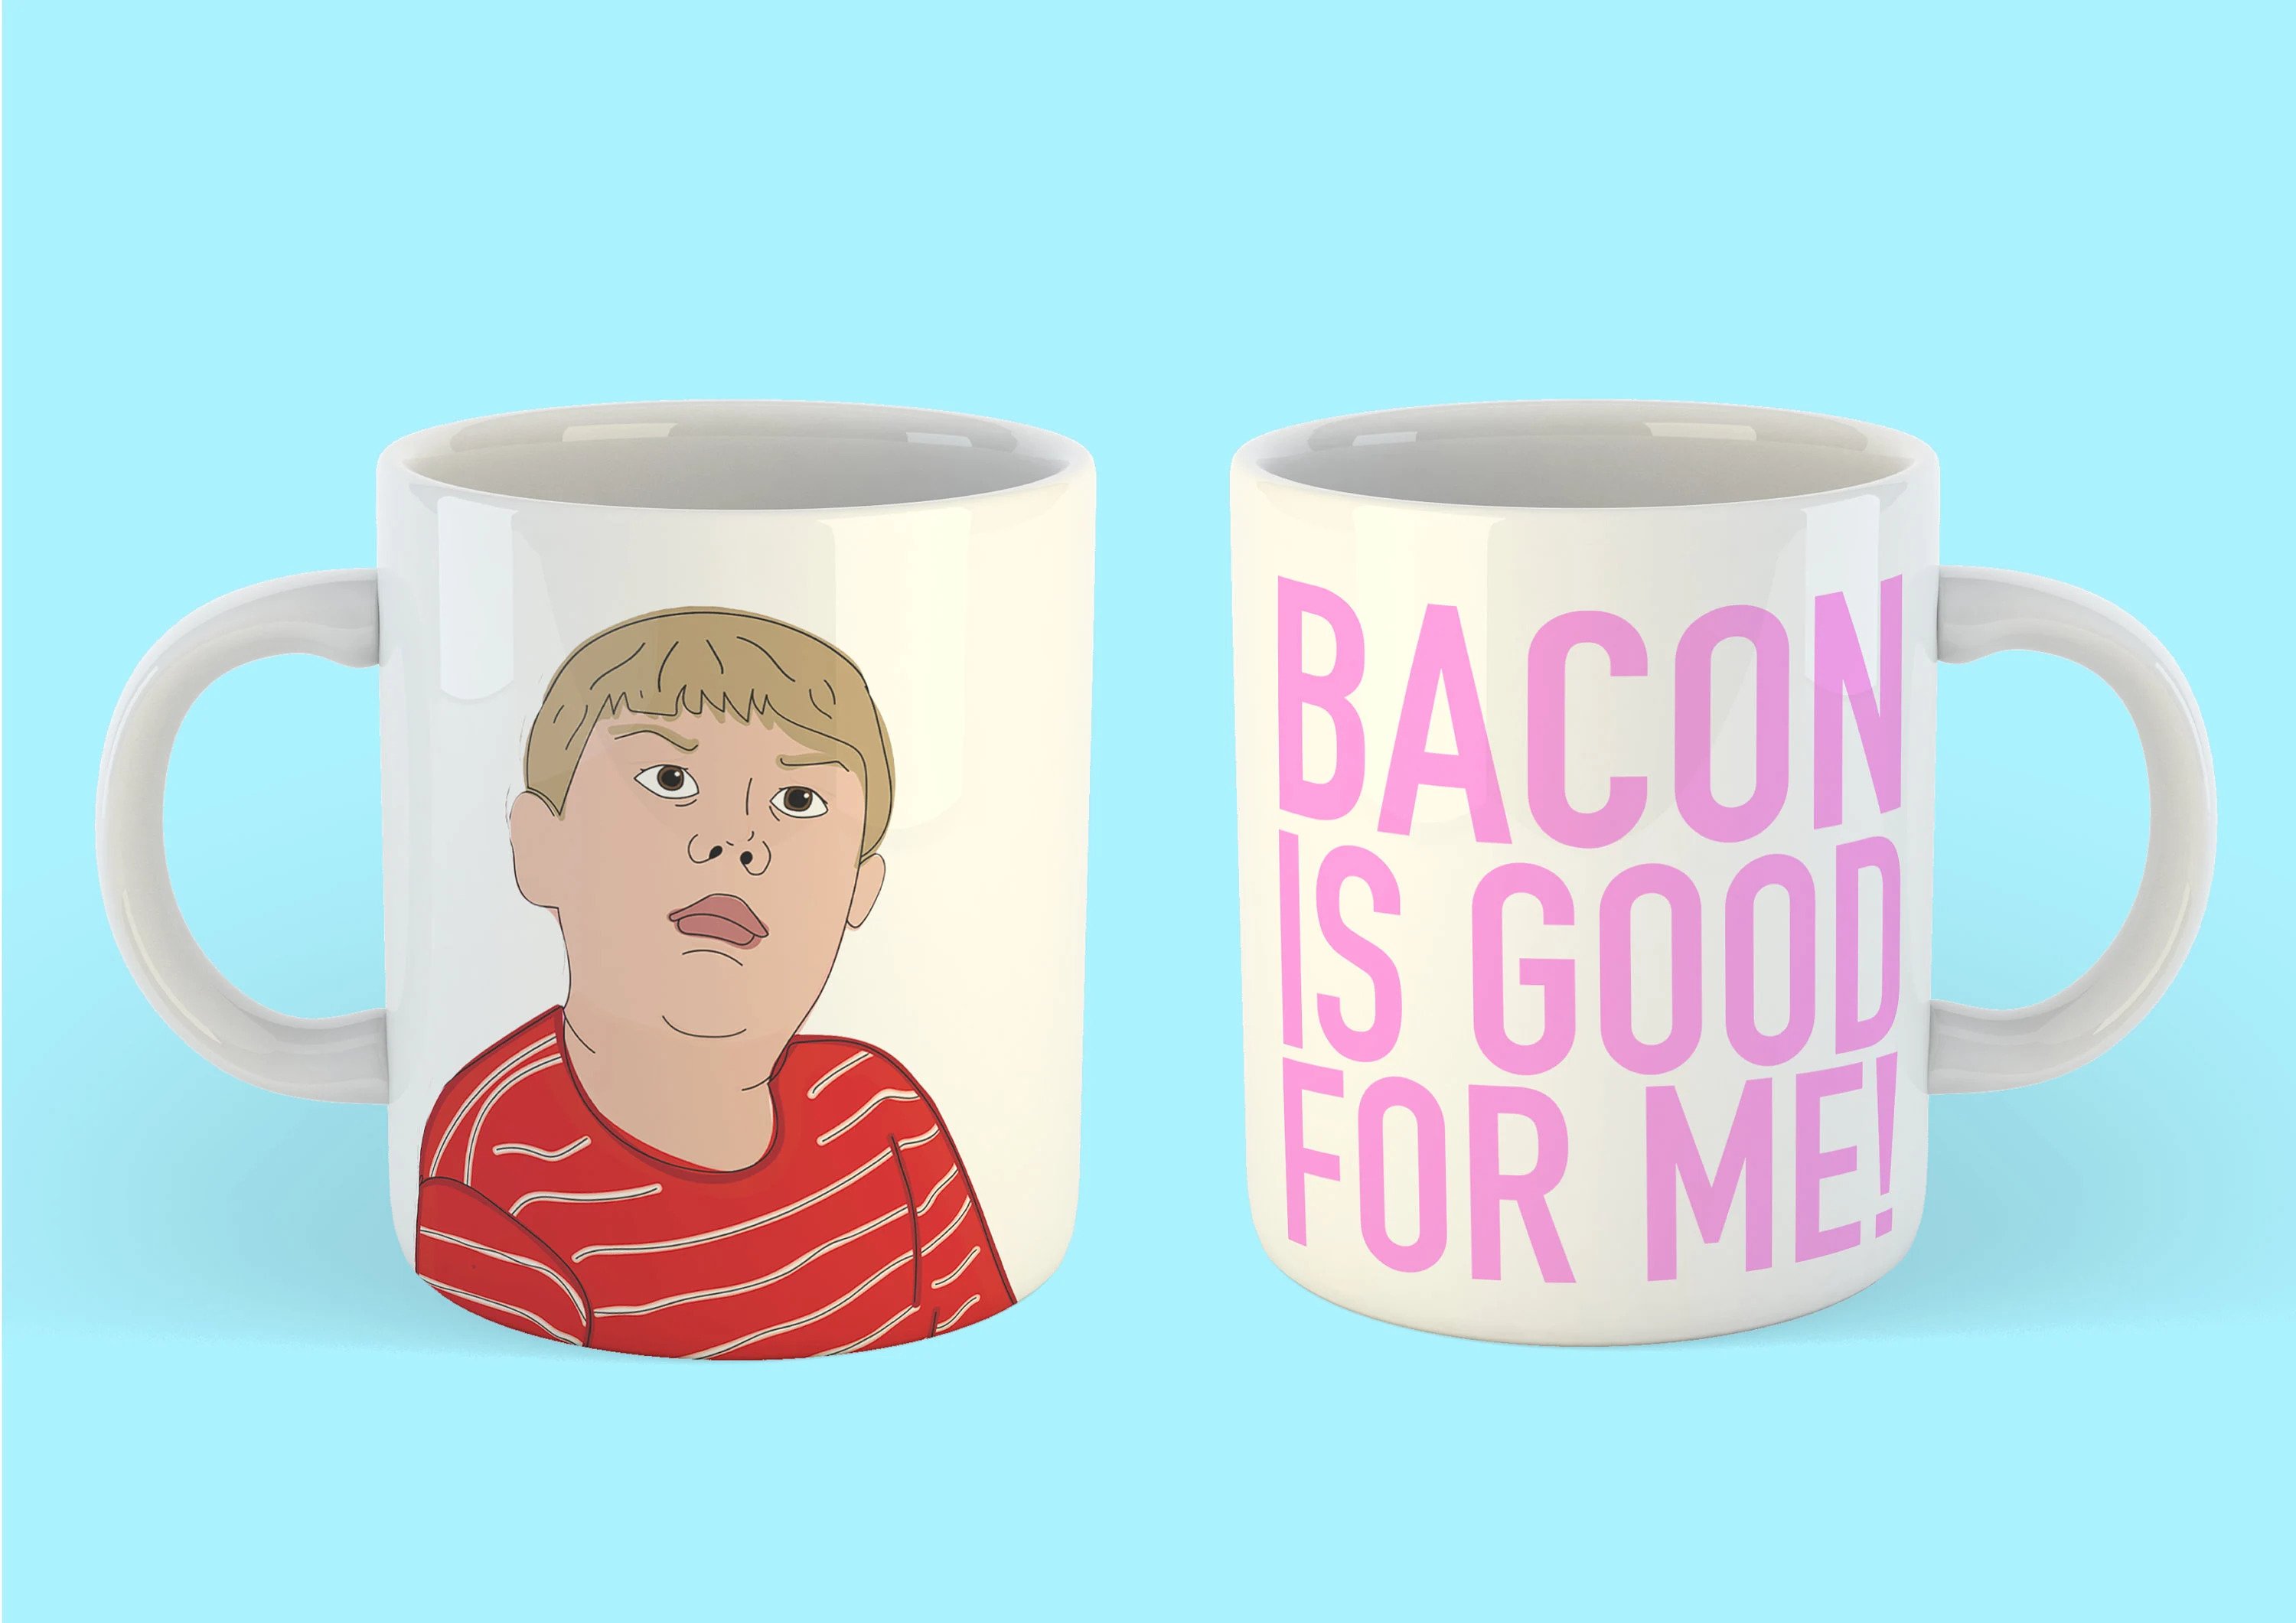 King Curtis printed on a white mug; Bacon is good for me printed on a white mug